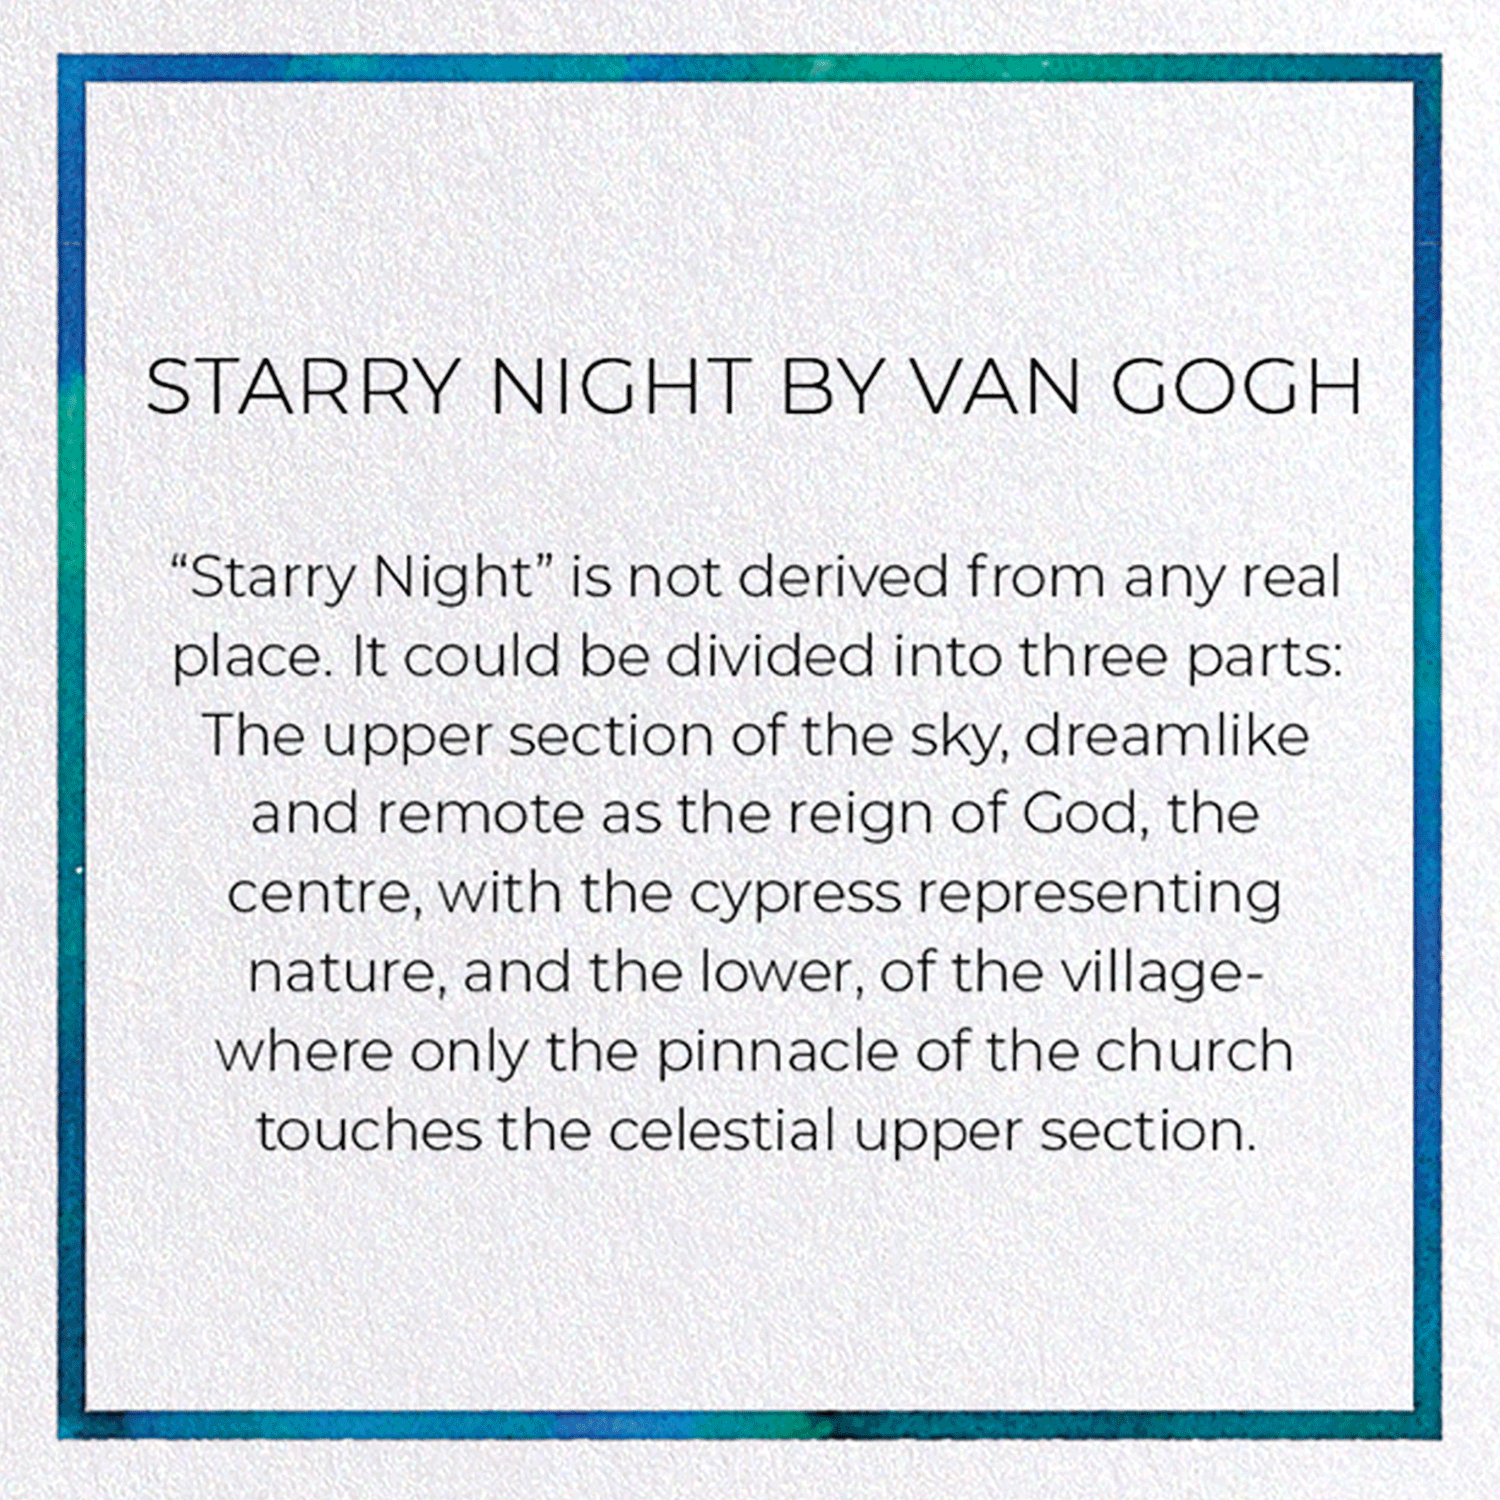 STARRY NIGHT BY VAN GOGH